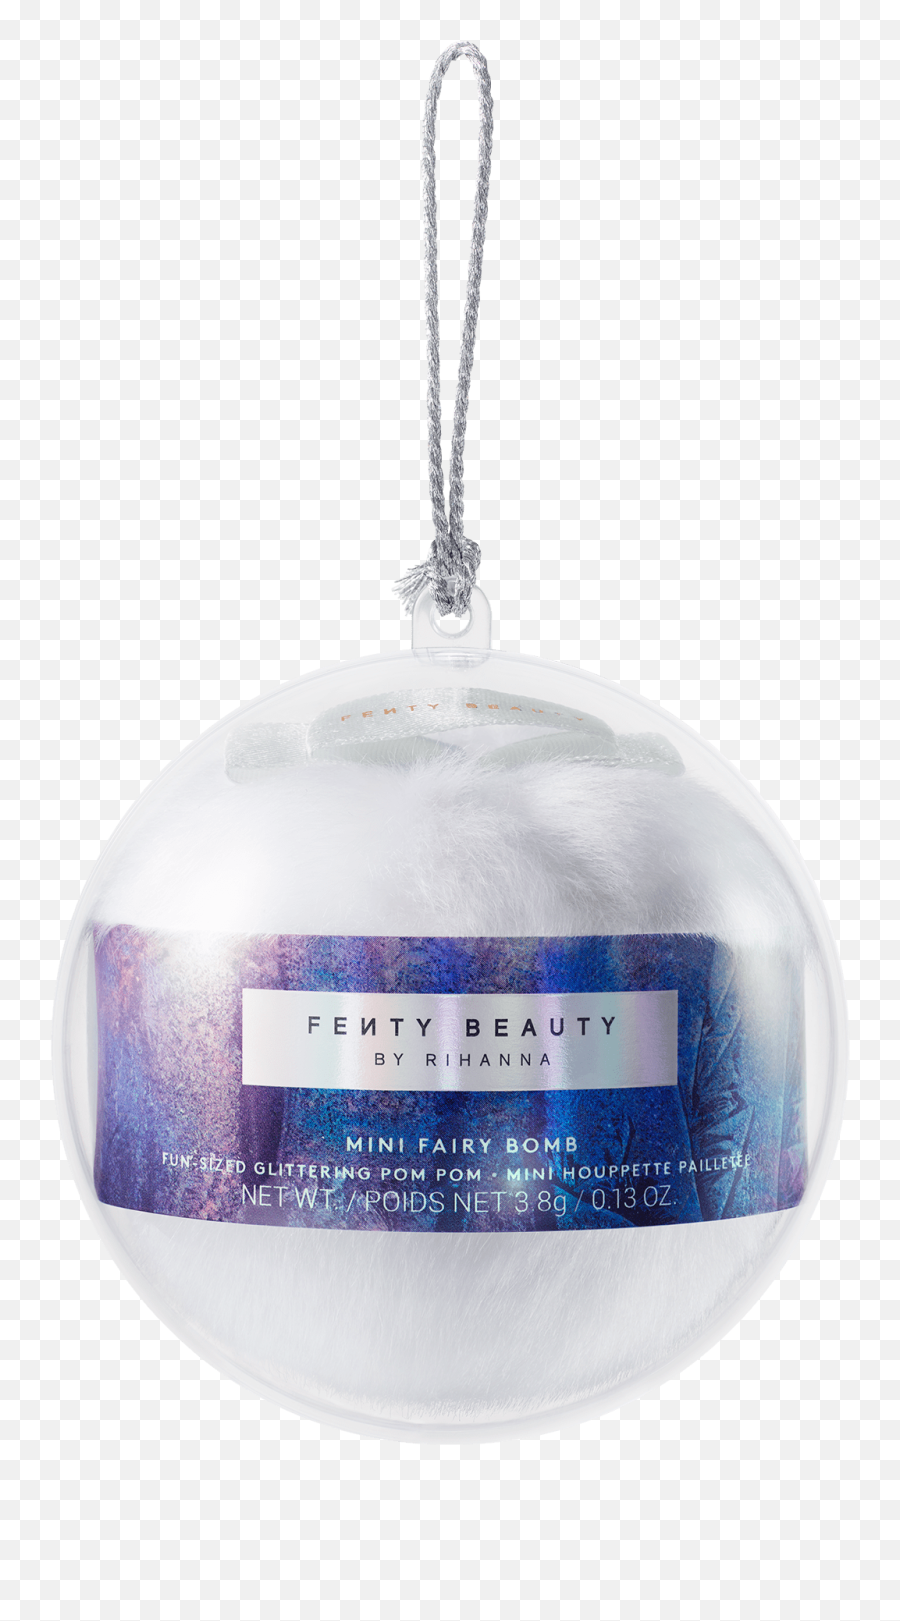 The 12 Days Of Giveaways - Day 2 Fenty Beauty Holiday Fenty Mini Fairy Bomb Emoji,Fenty Beauty Logo